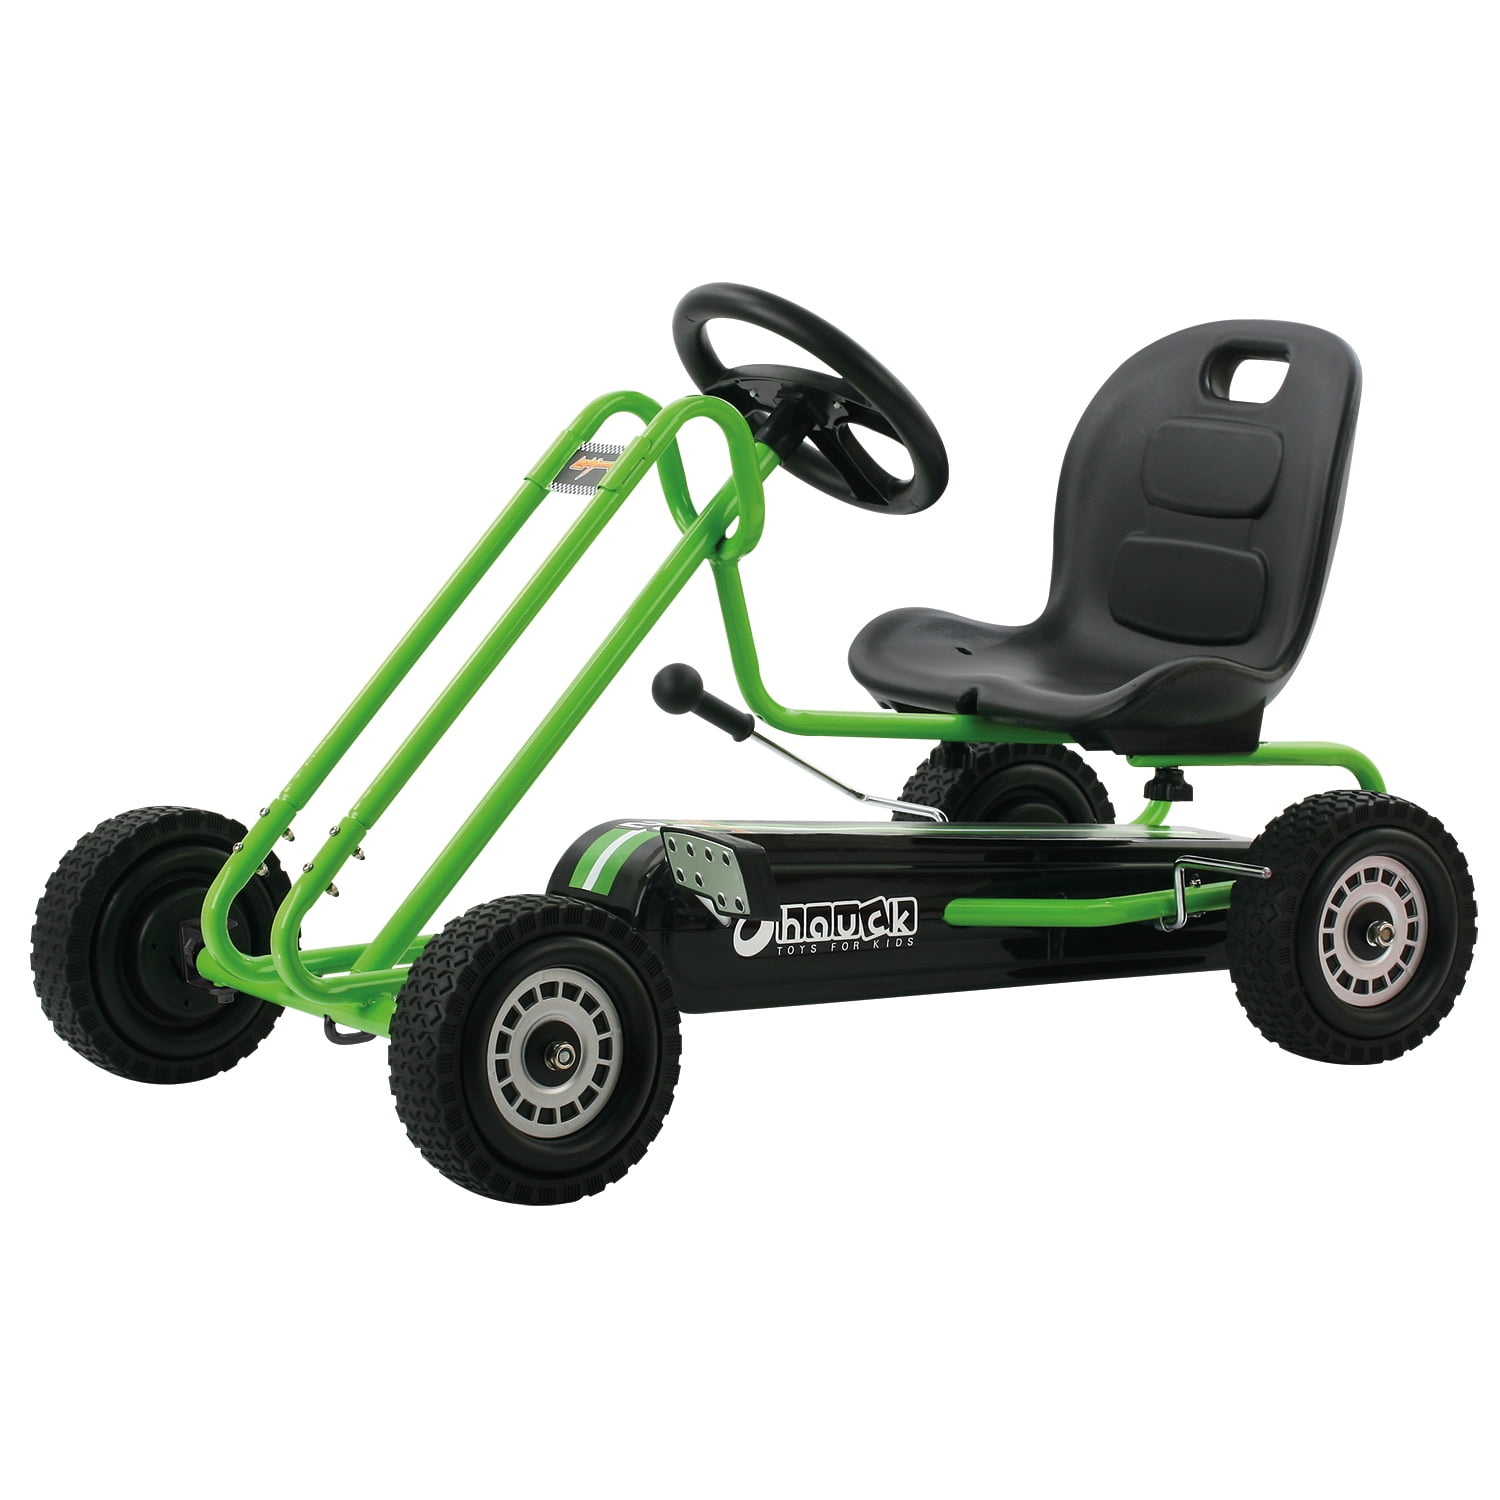 Pedal Go Kart Ride On Toys for Boys & Girls with Ergonomic Adjustable Seat & Sharp Handling Hauck Lightning Pedal Car Orange 